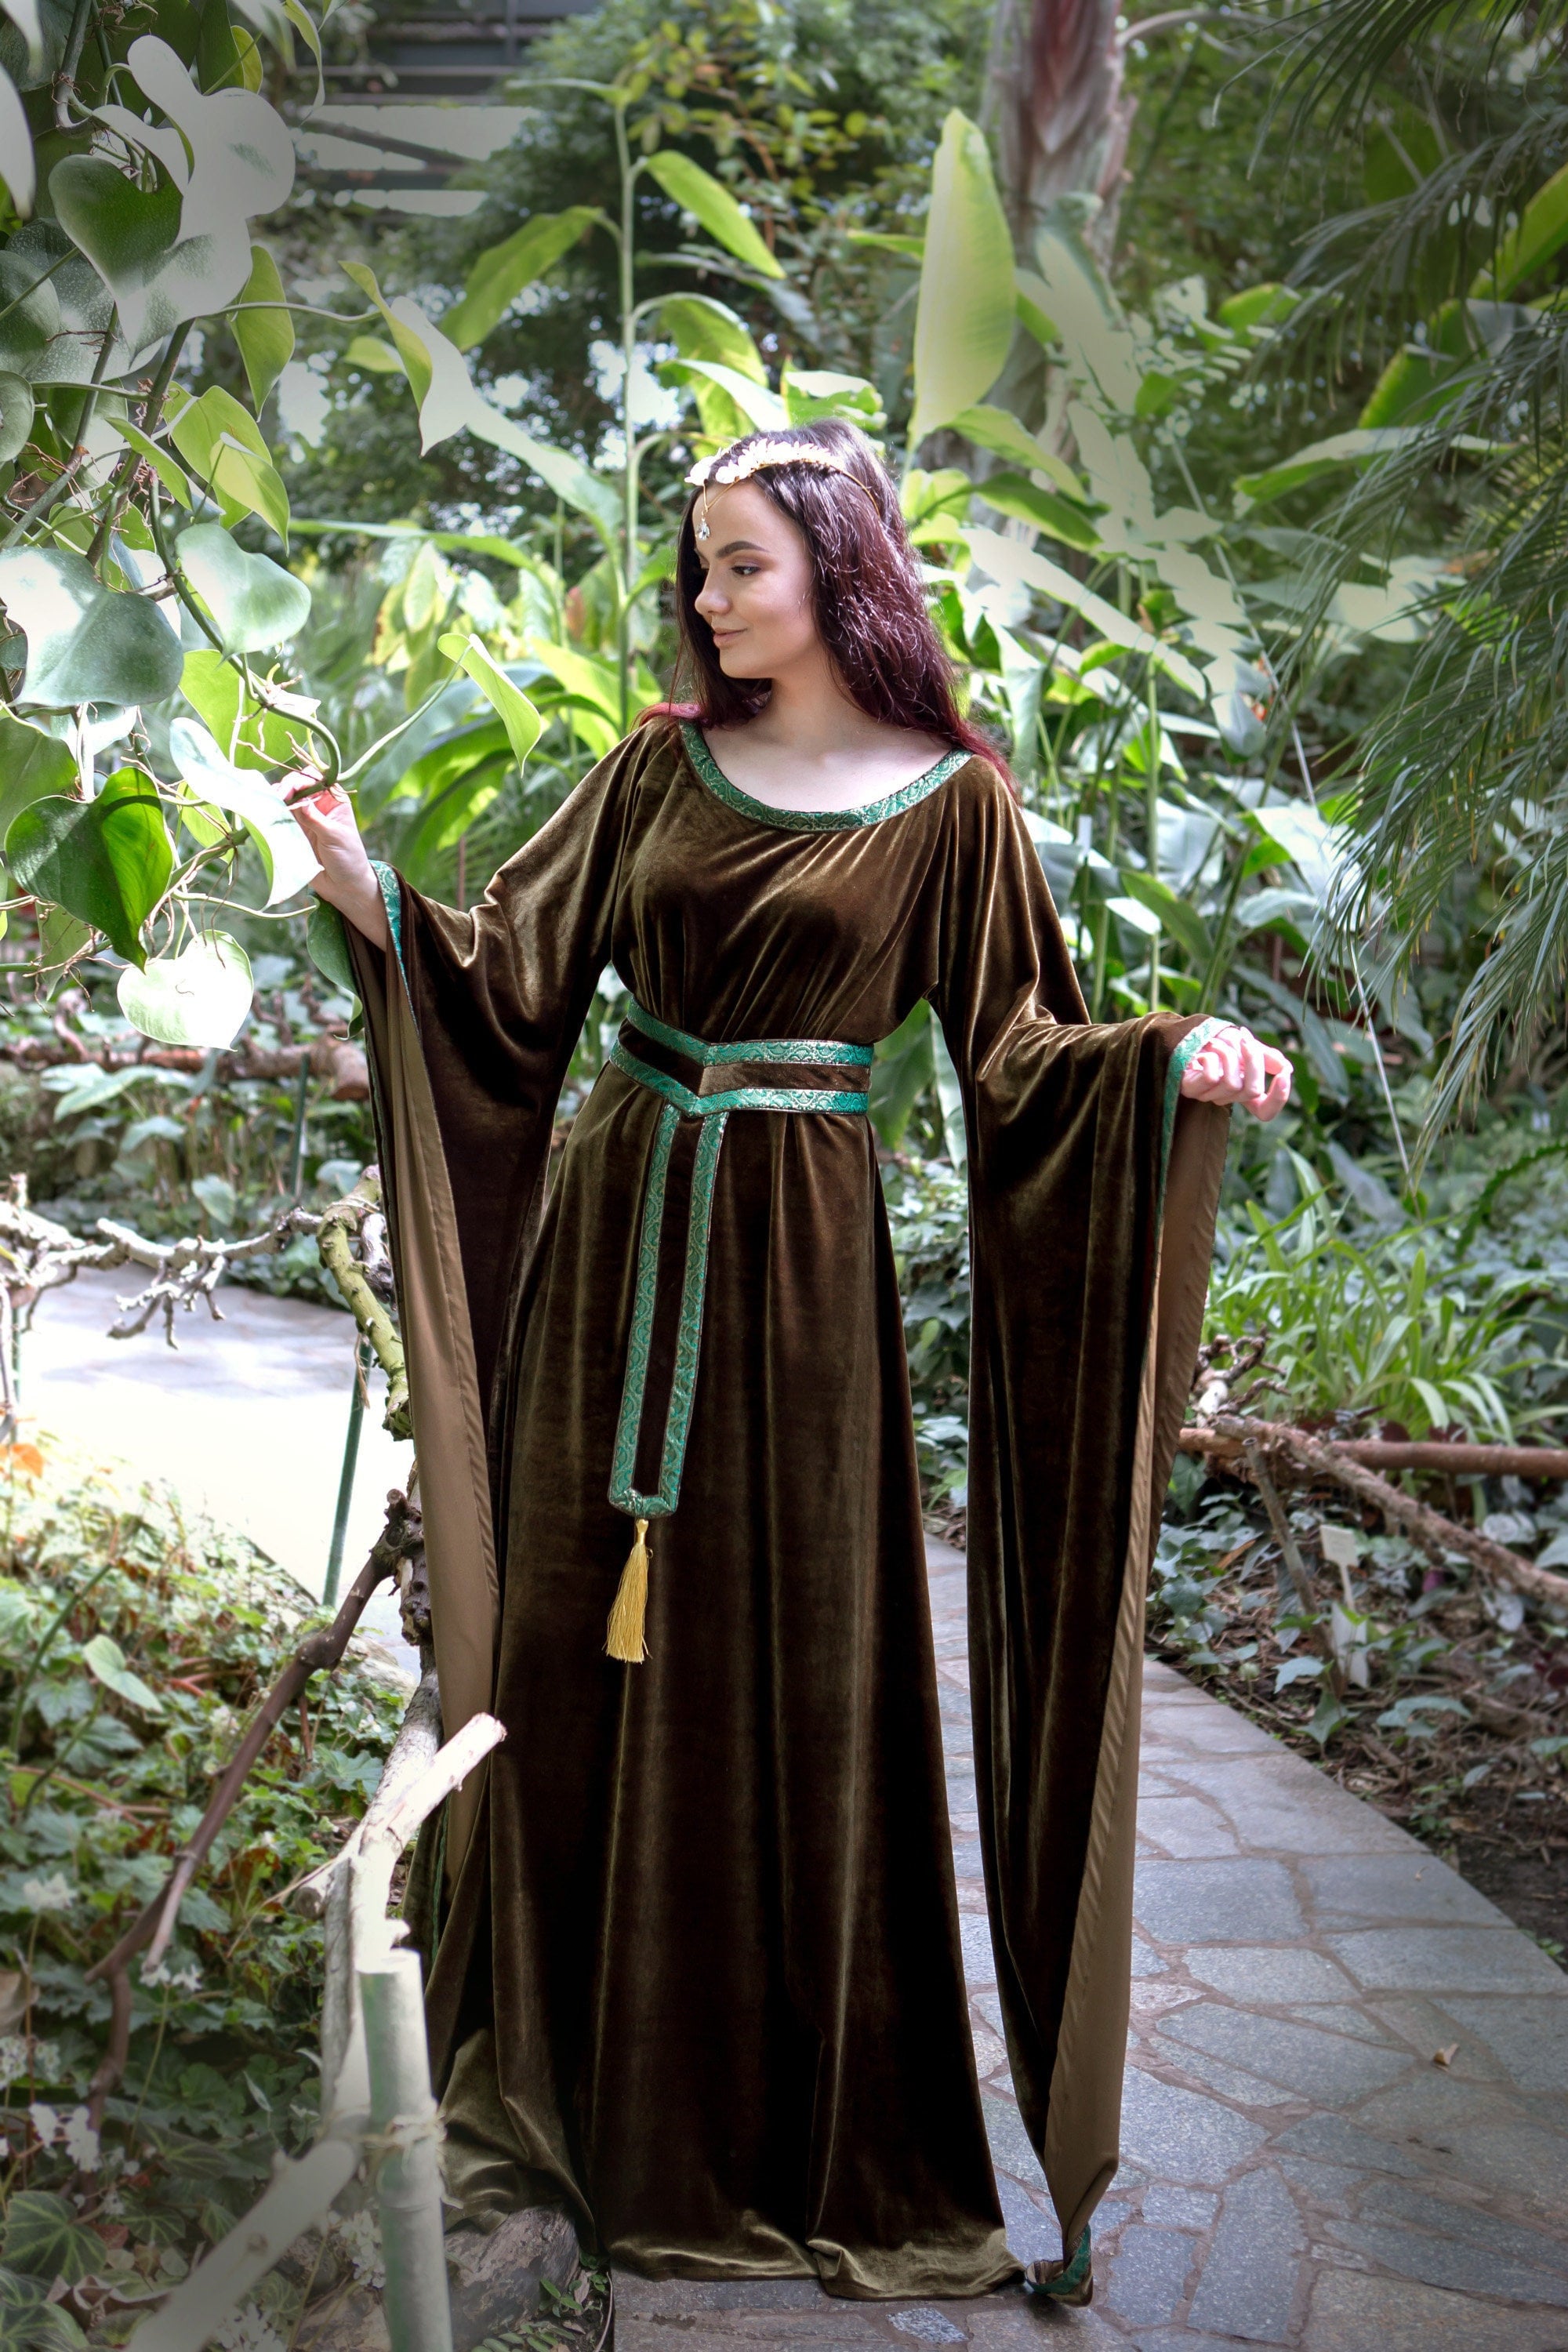 Disfraz Medieval Princesa Celta Bosques